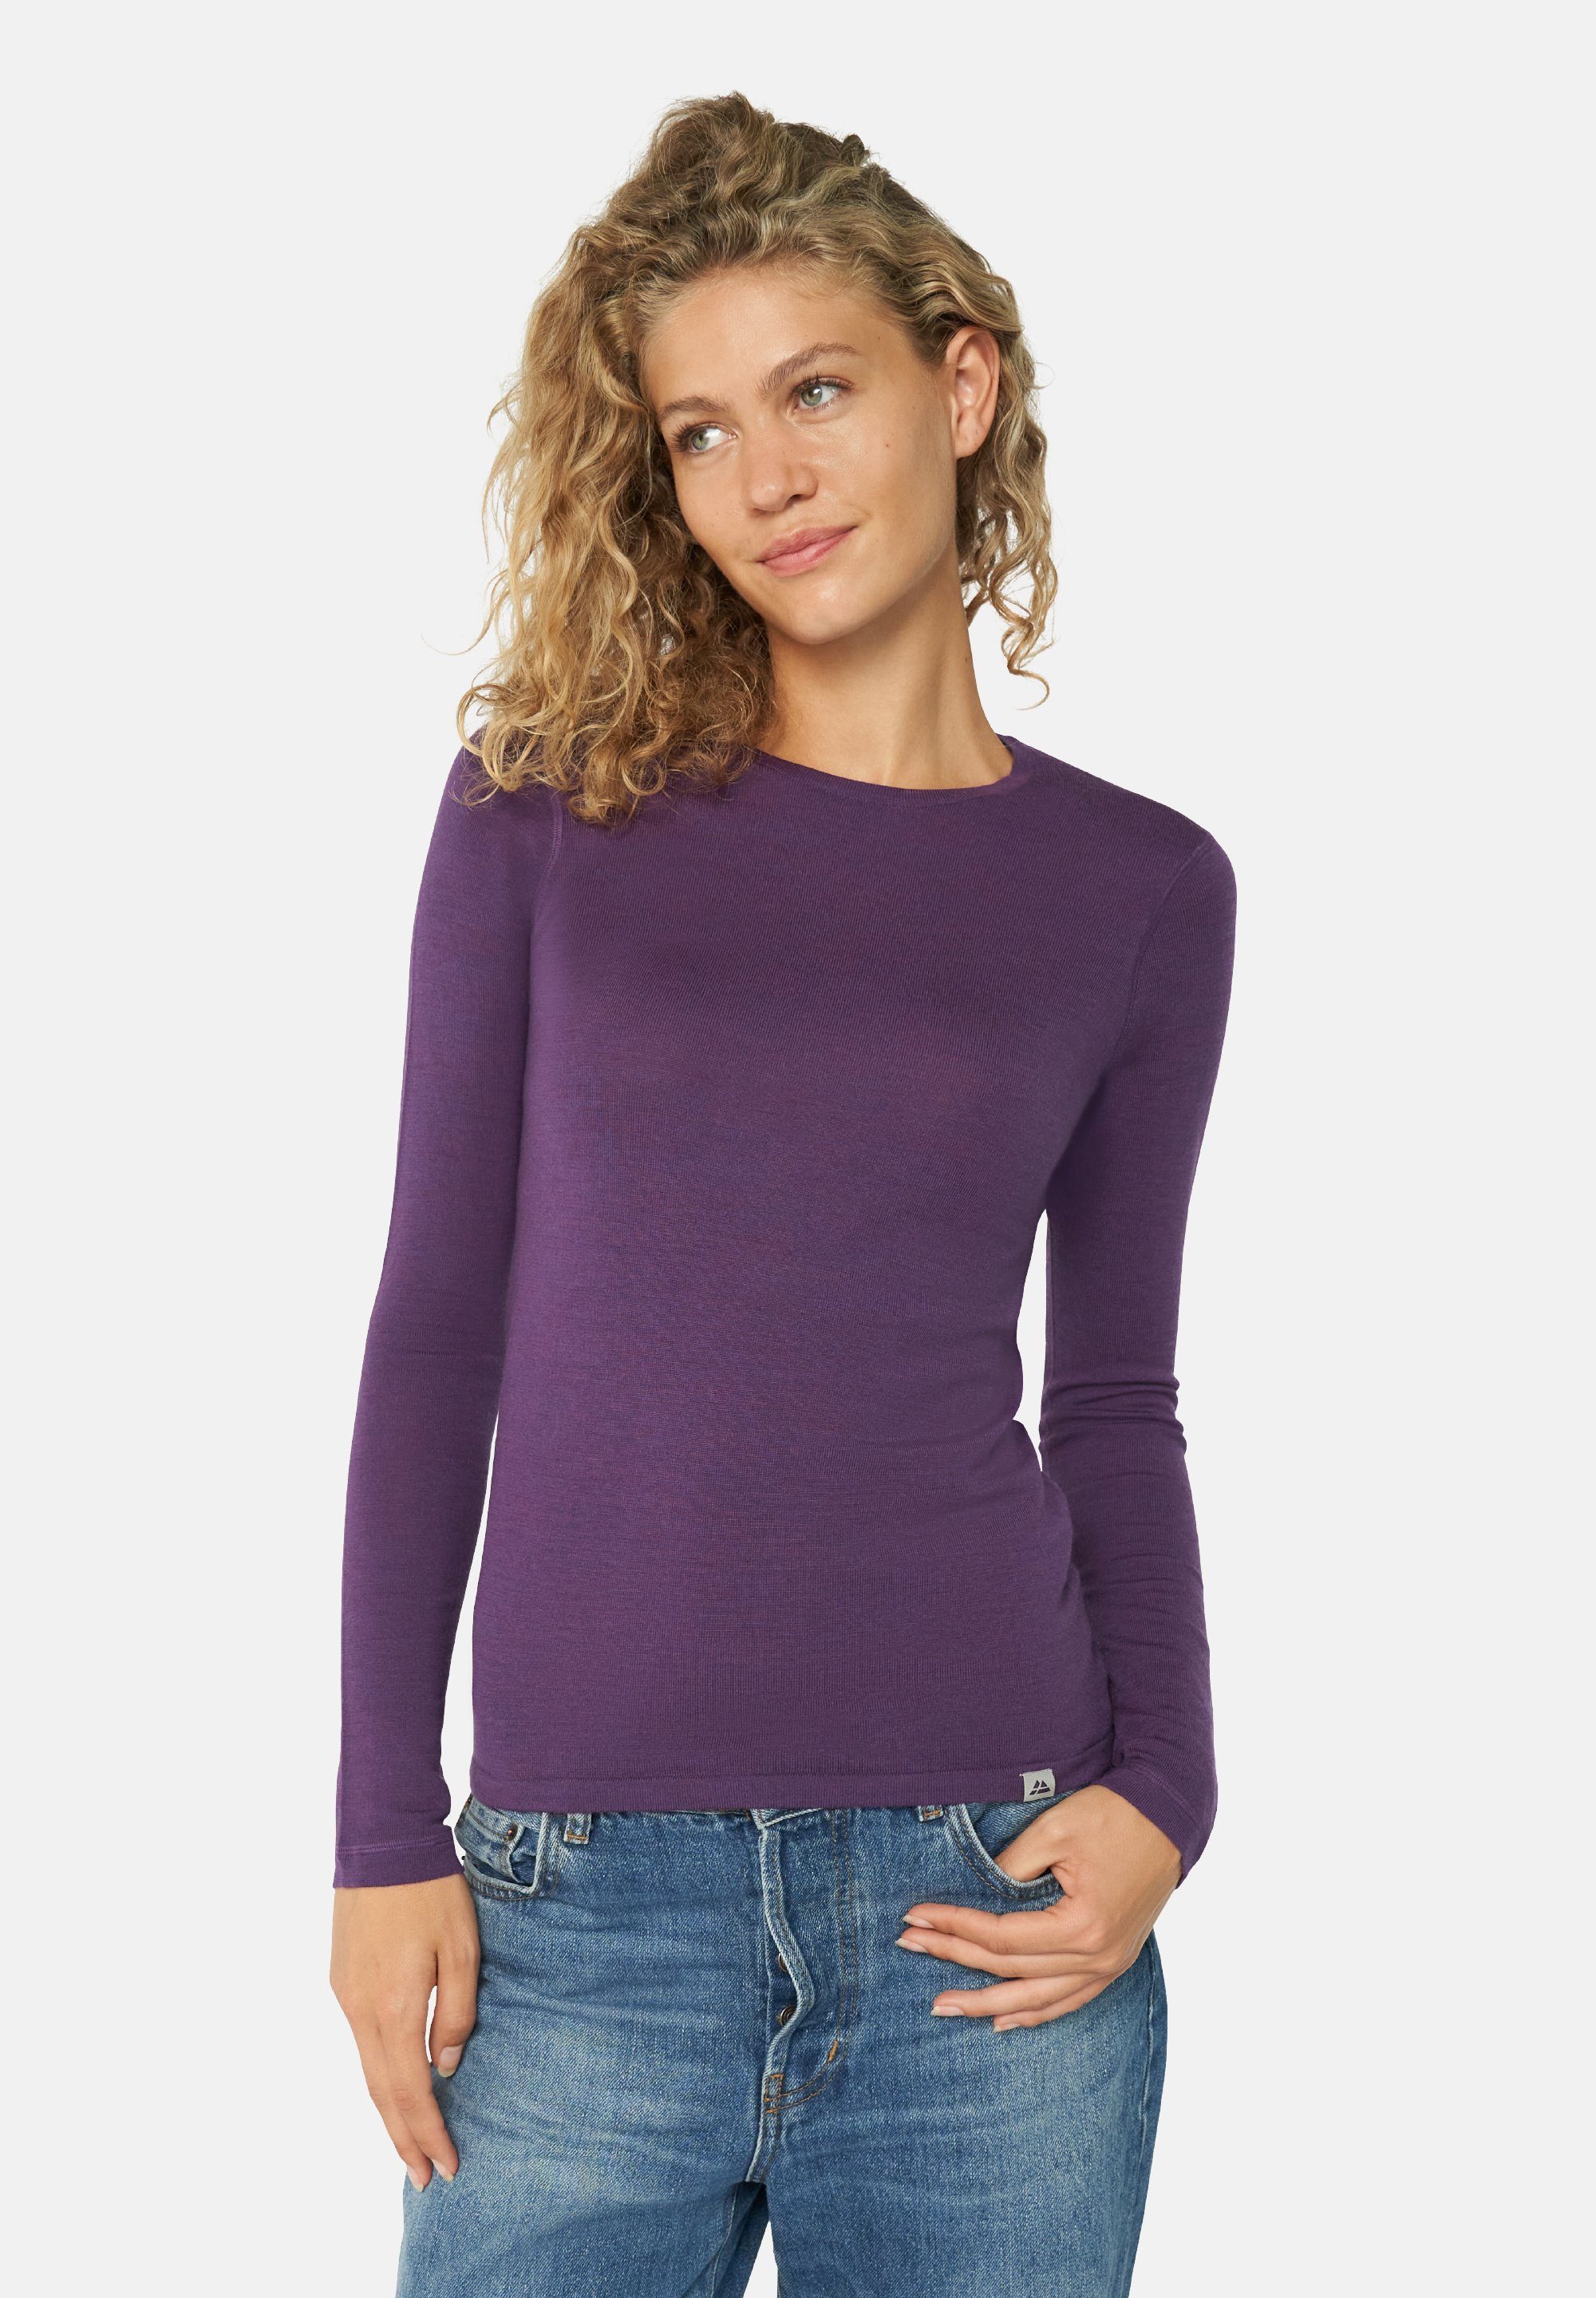 ENDURANCE Damen purple Funktionsshirt Merino DANISH Temperaturregulierend Thermounterhemd